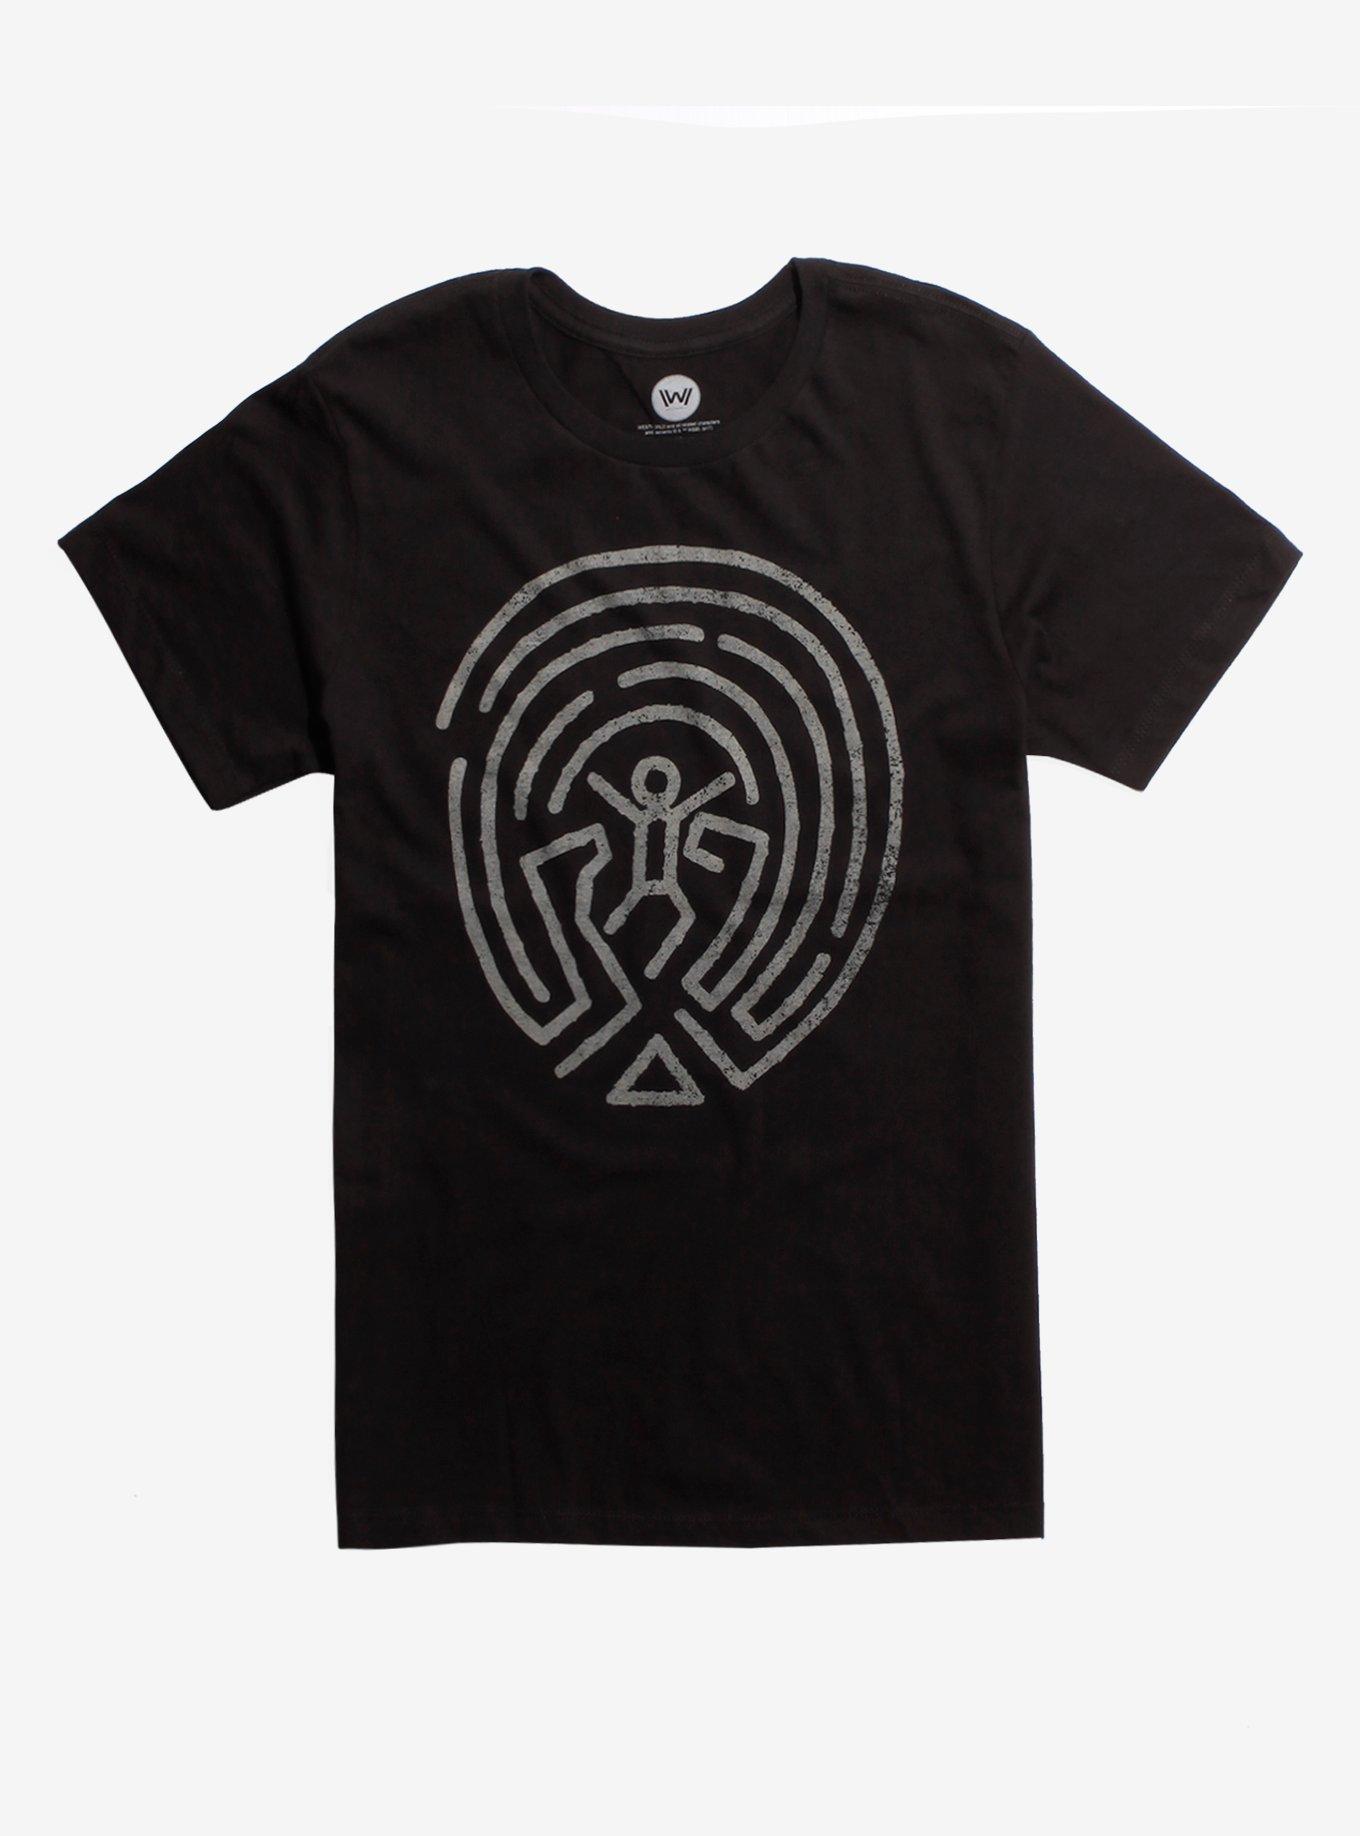 Westworld The Maze T-Shirt, BLACK, hi-res